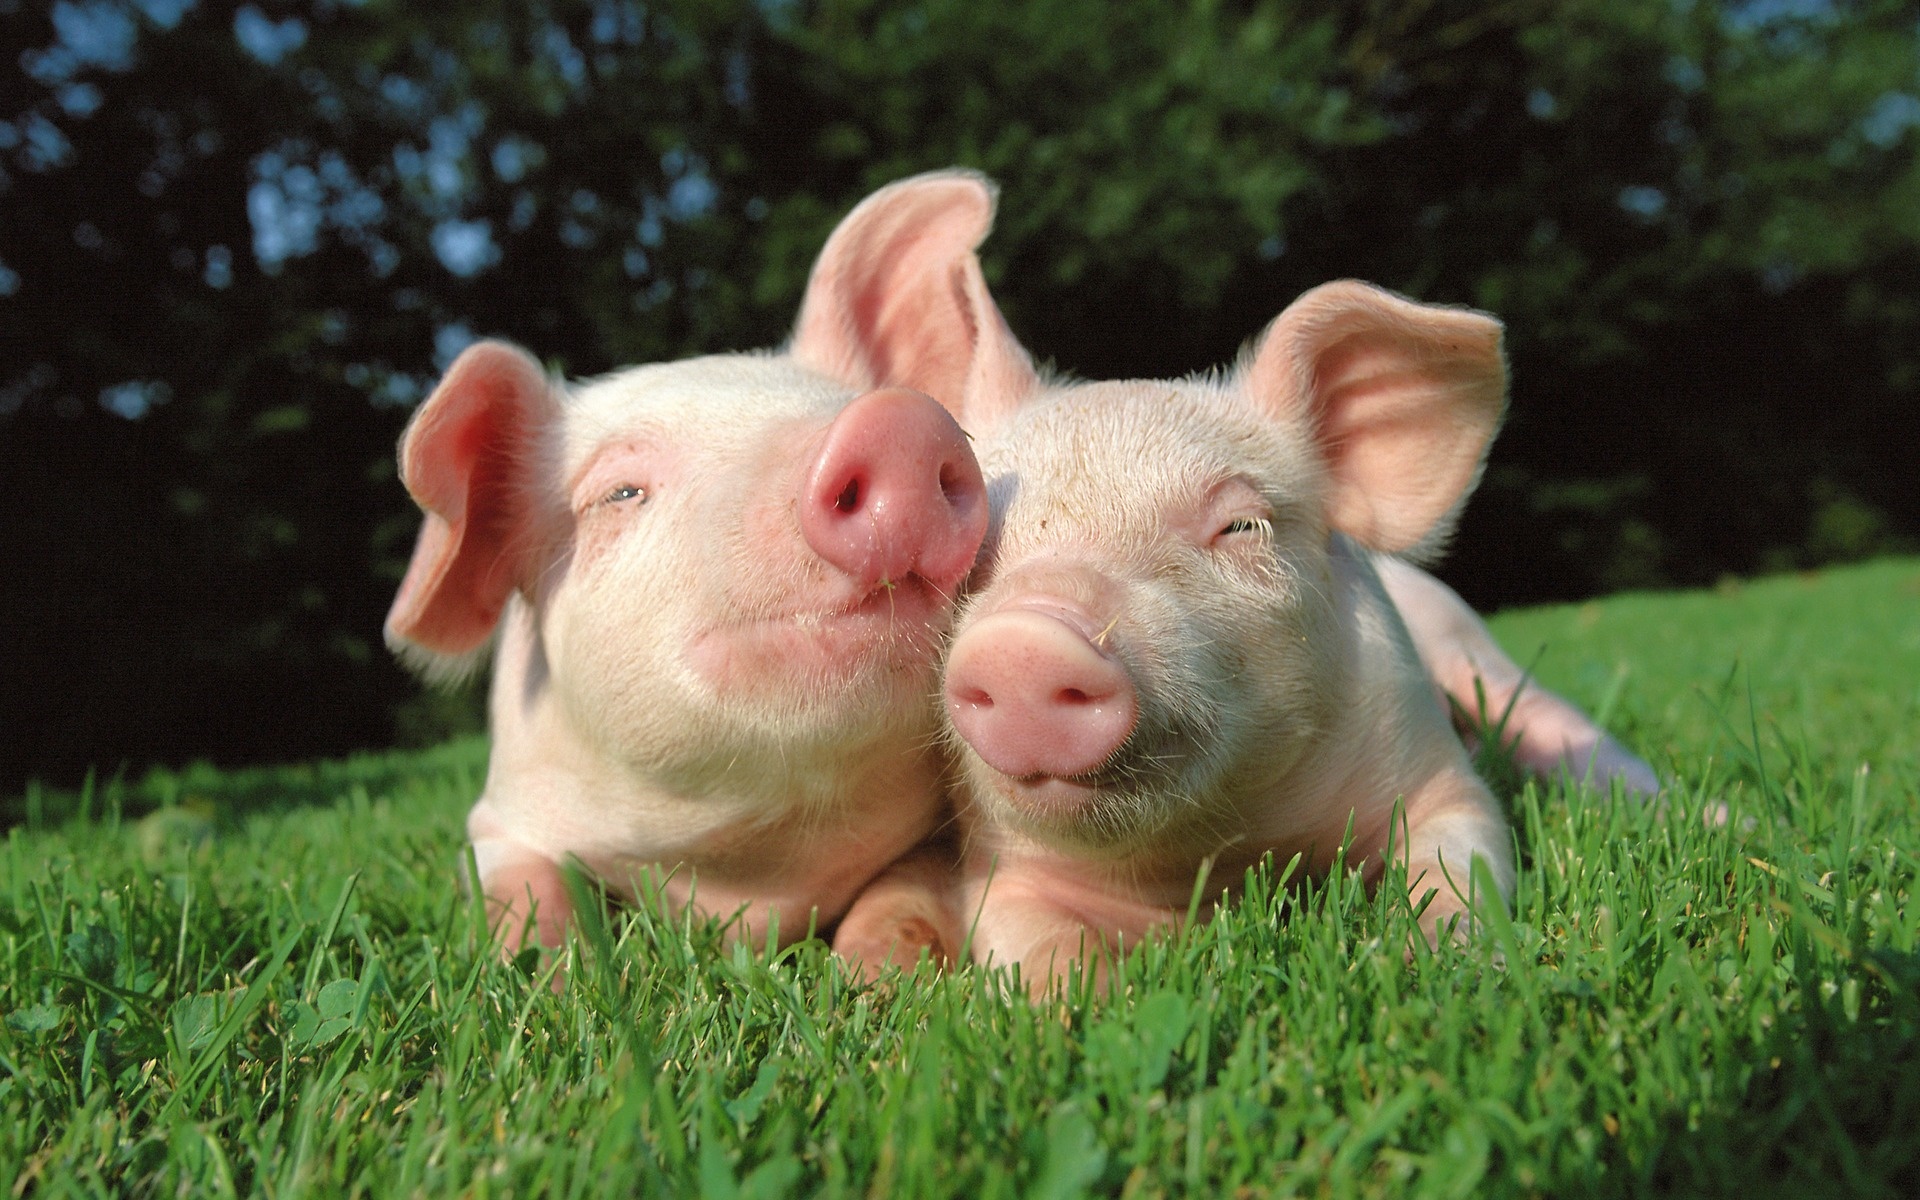 A cute pig in a refreshing green field.